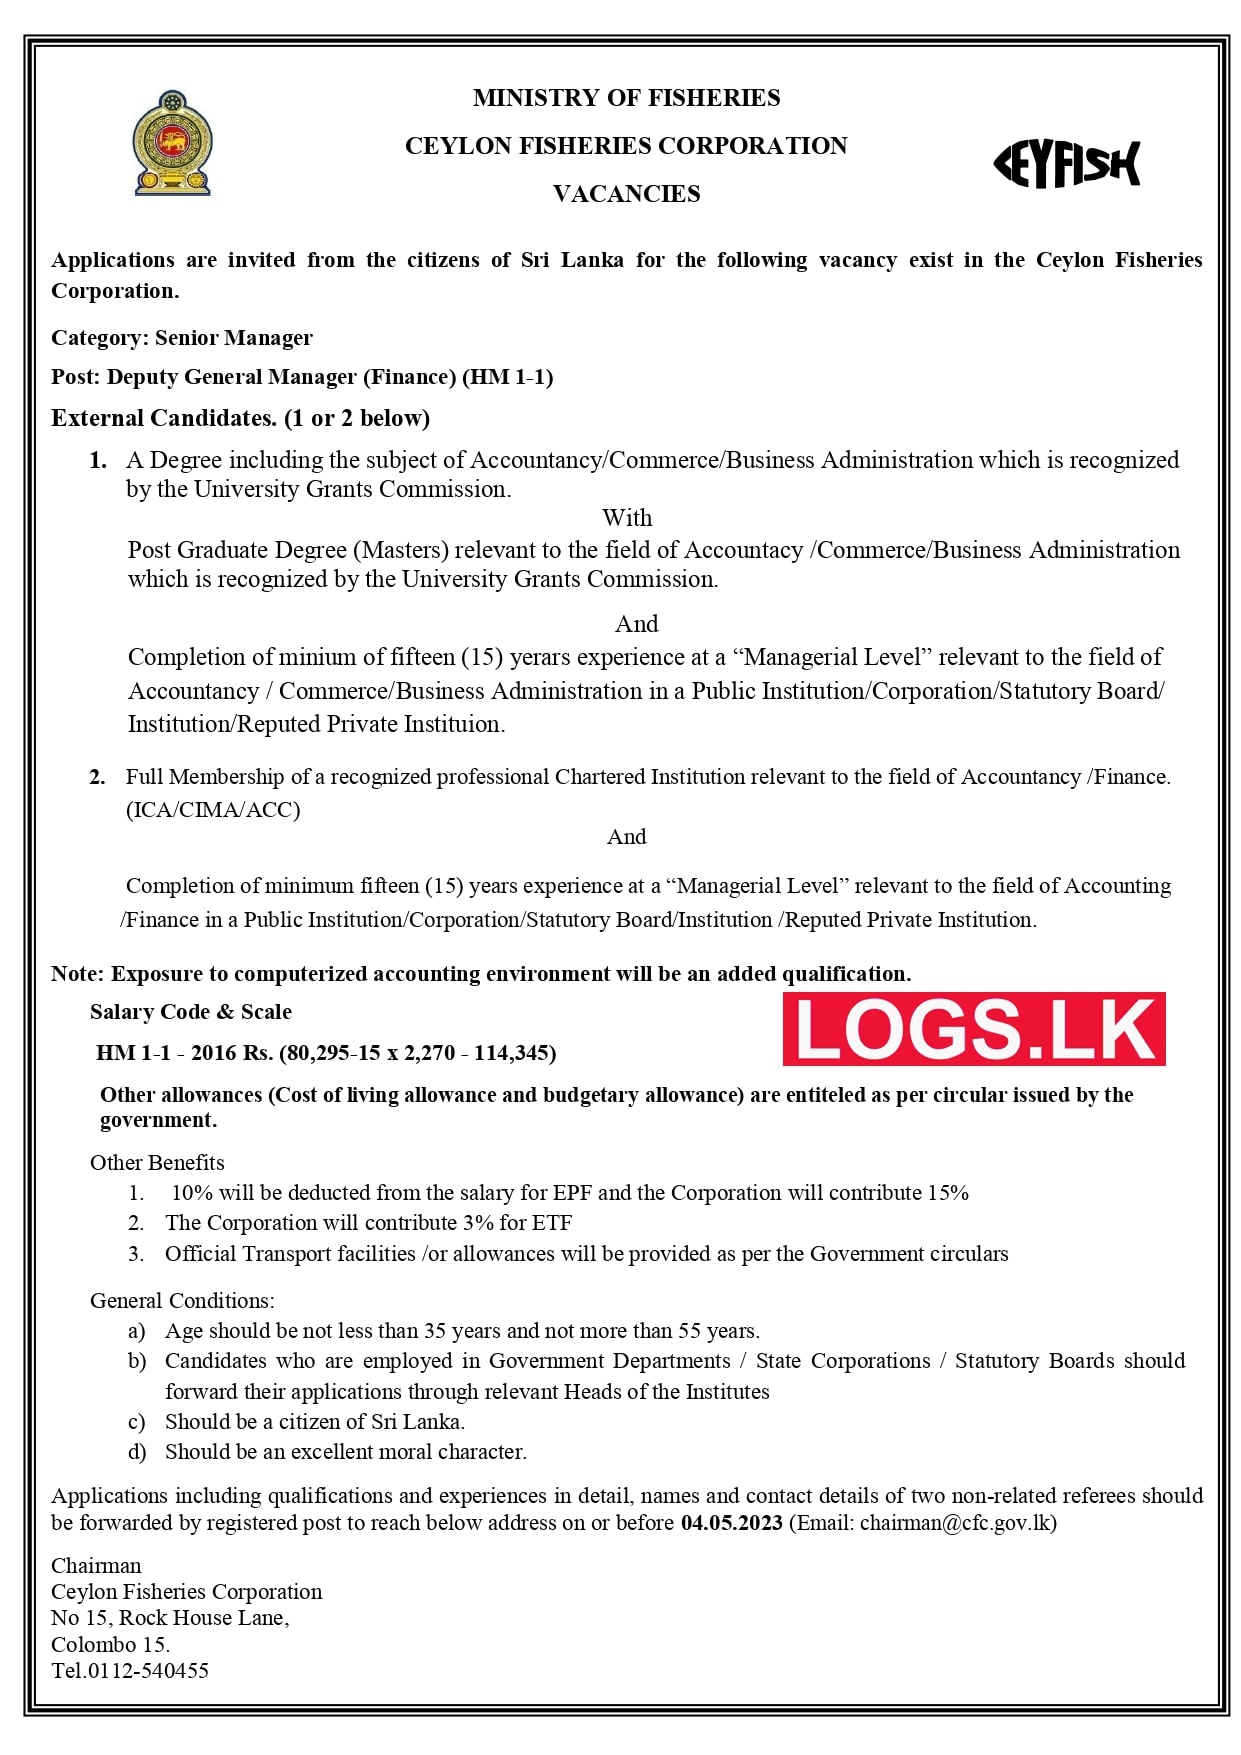 Deputy General Manager (Finance) - Ceylon Fisheries Corporation Vacancies 2023 Application, Details Download